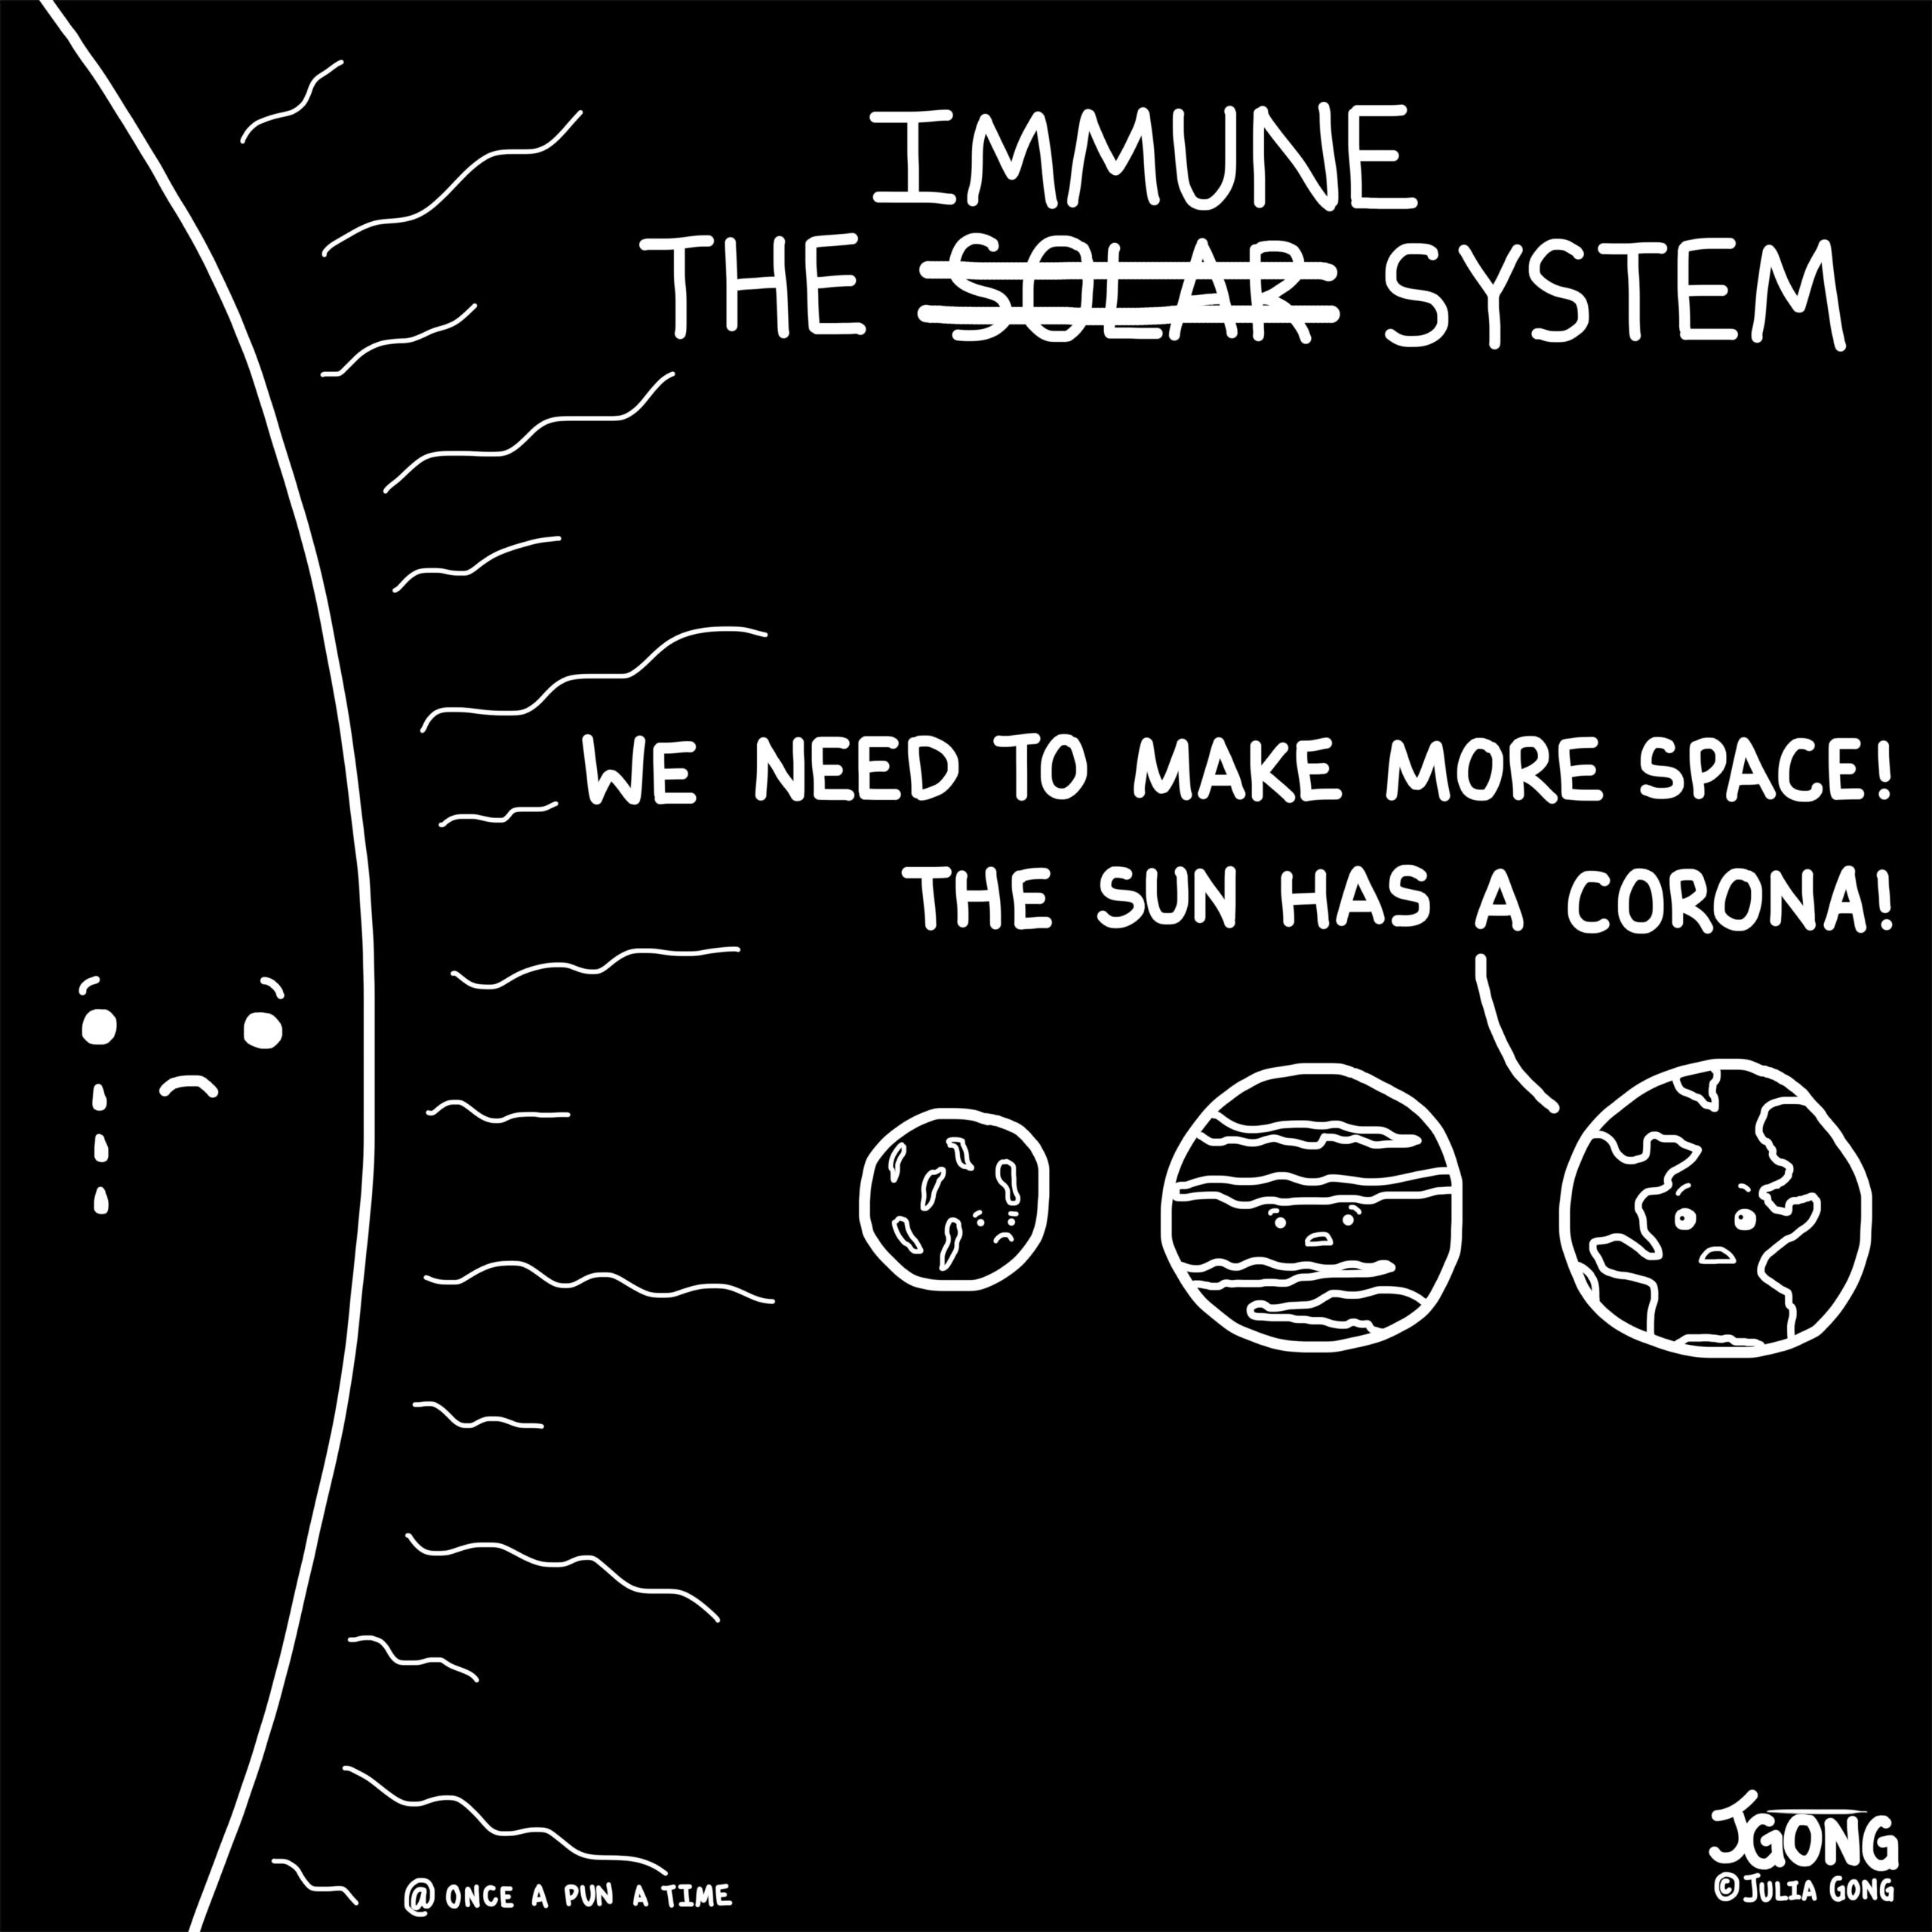 We need to make more space! The Sun has a corona!